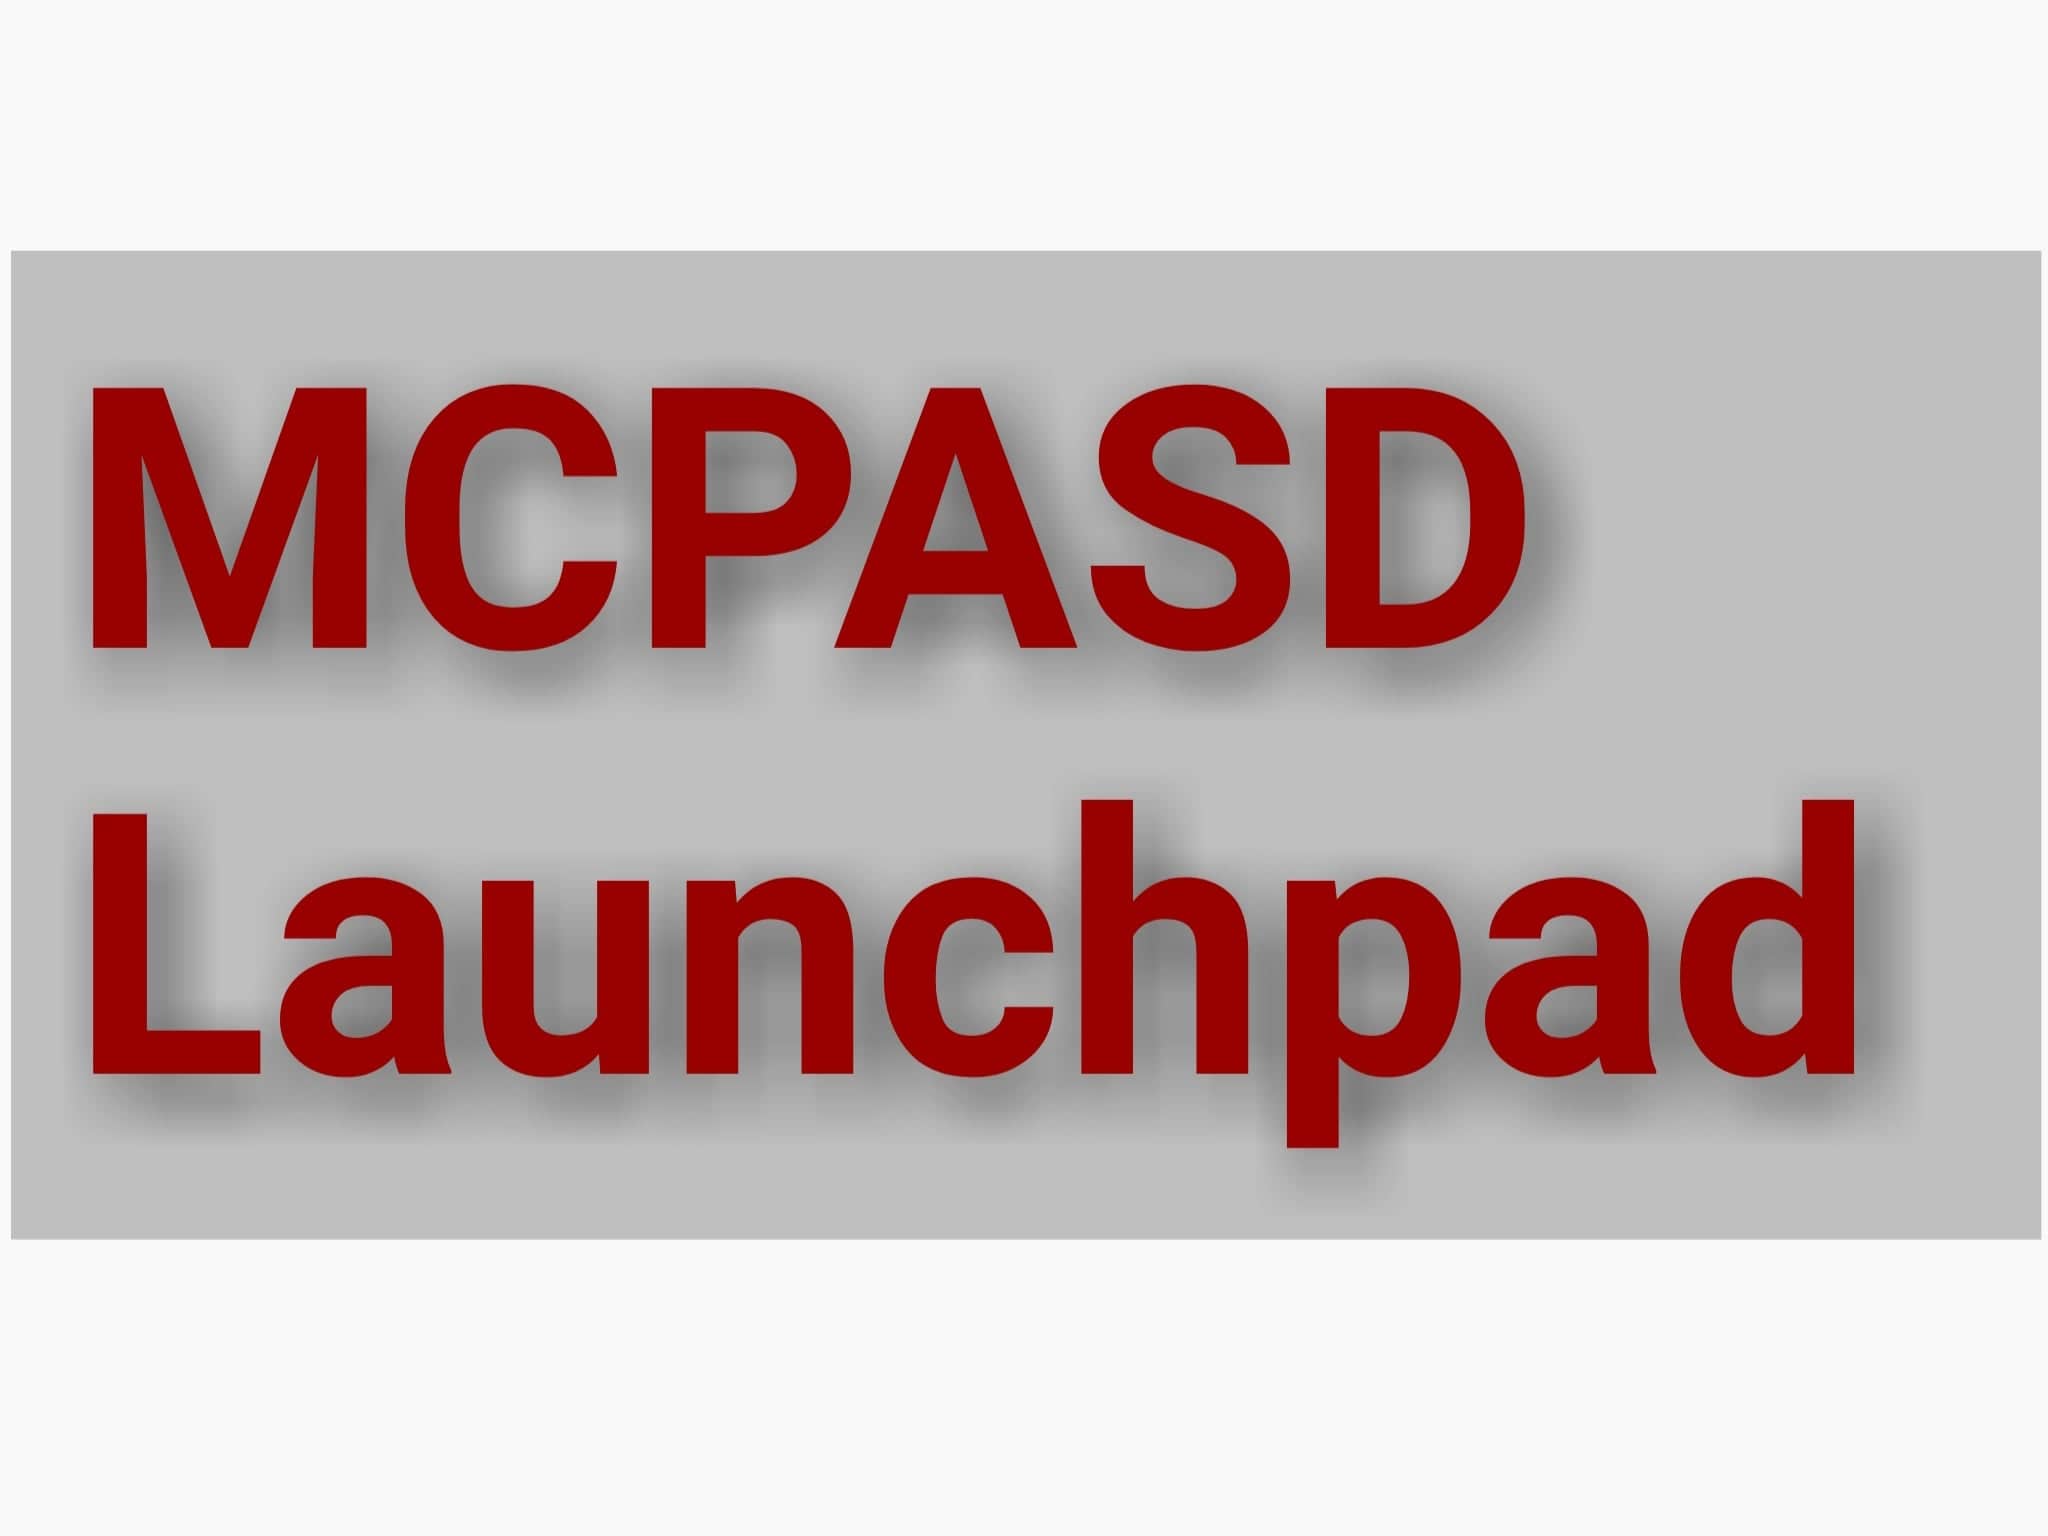 MCPASD Launchpad